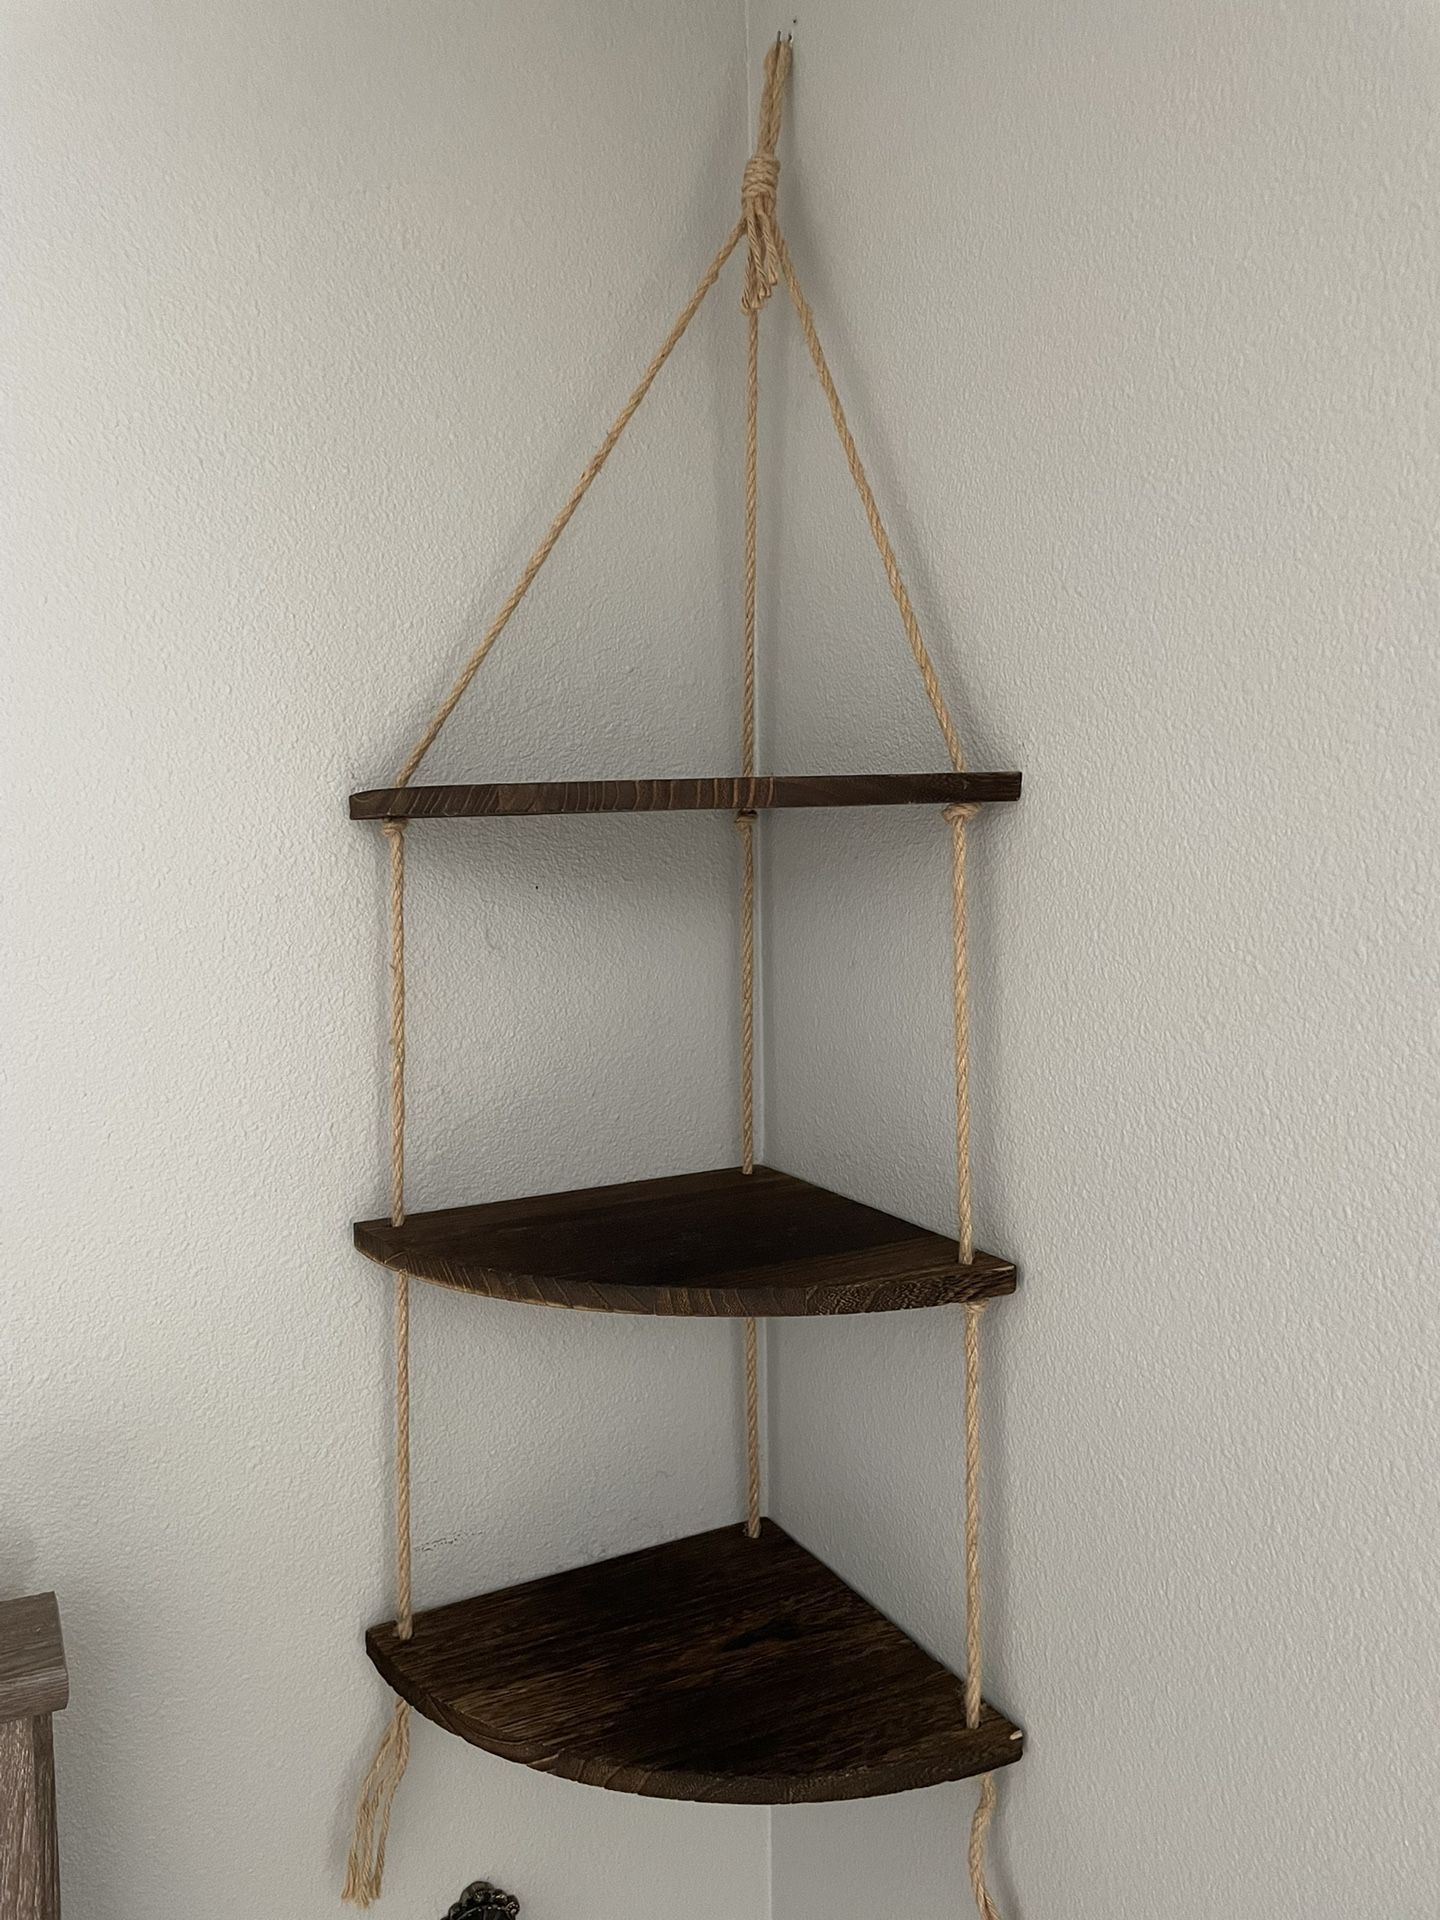 Two Hanging Natural Wood Corner Shelves